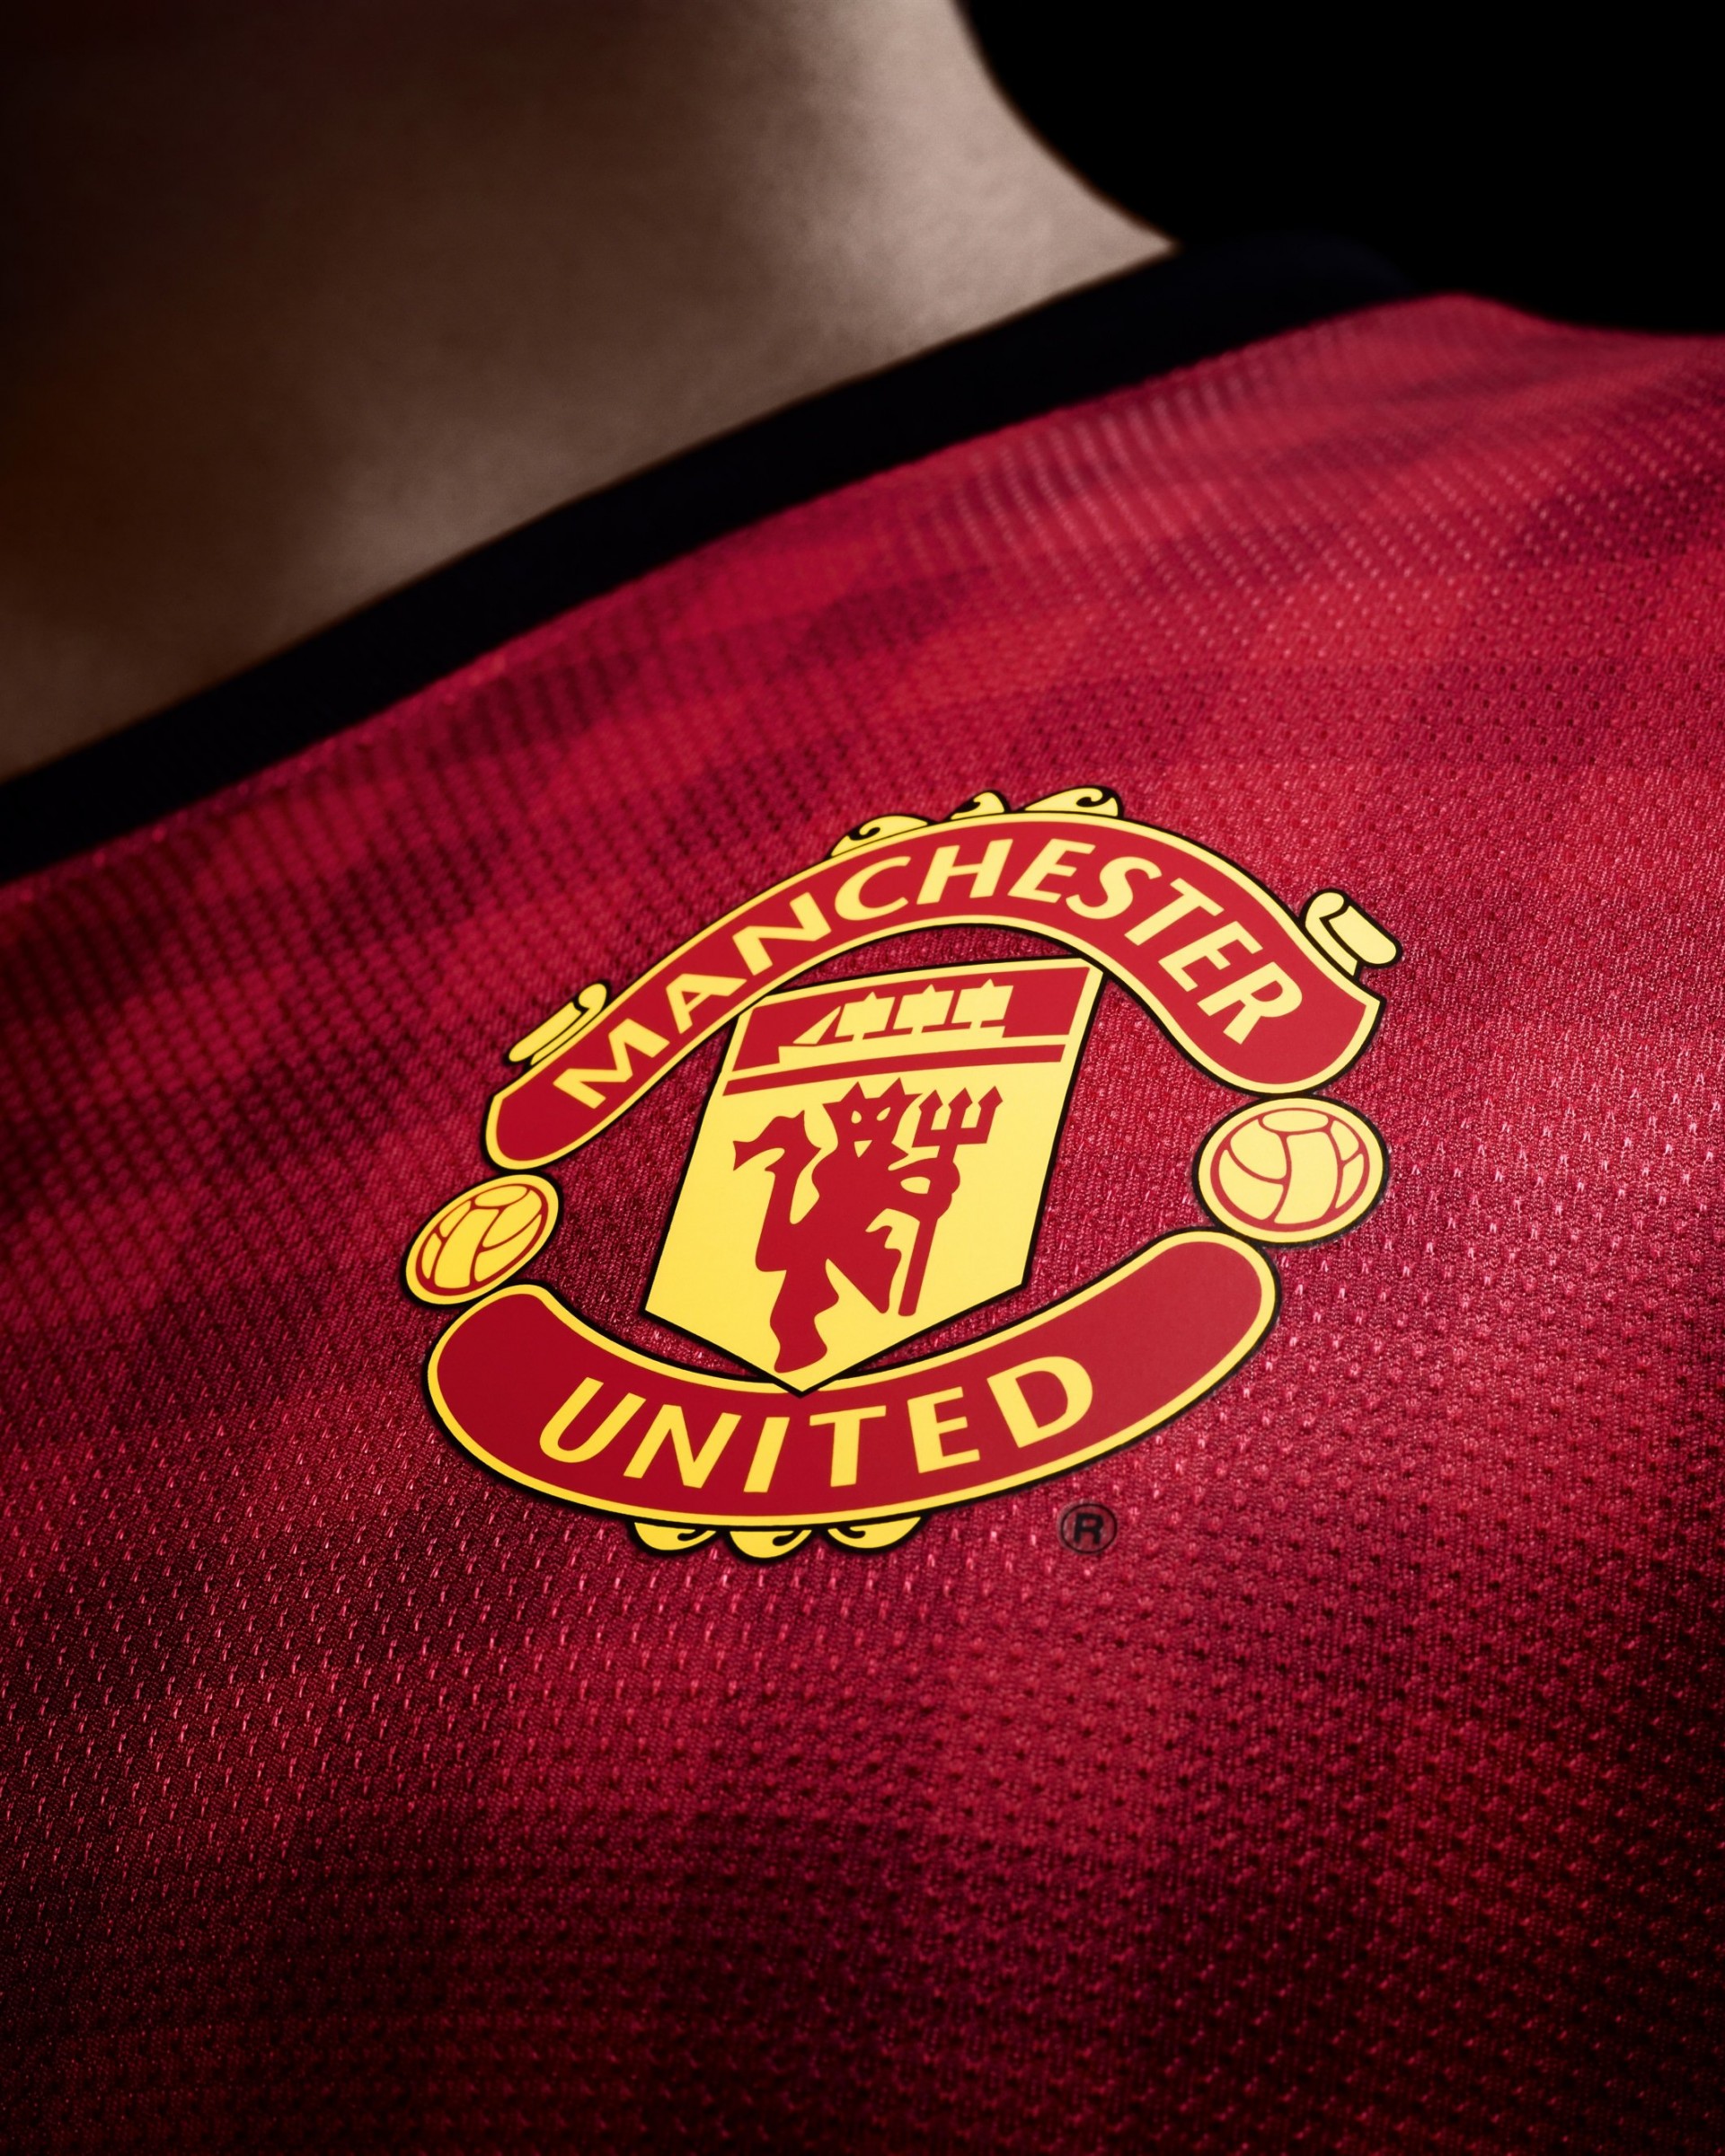 Manchester United Logo Shirt Wallpaper for Google Nexus 7